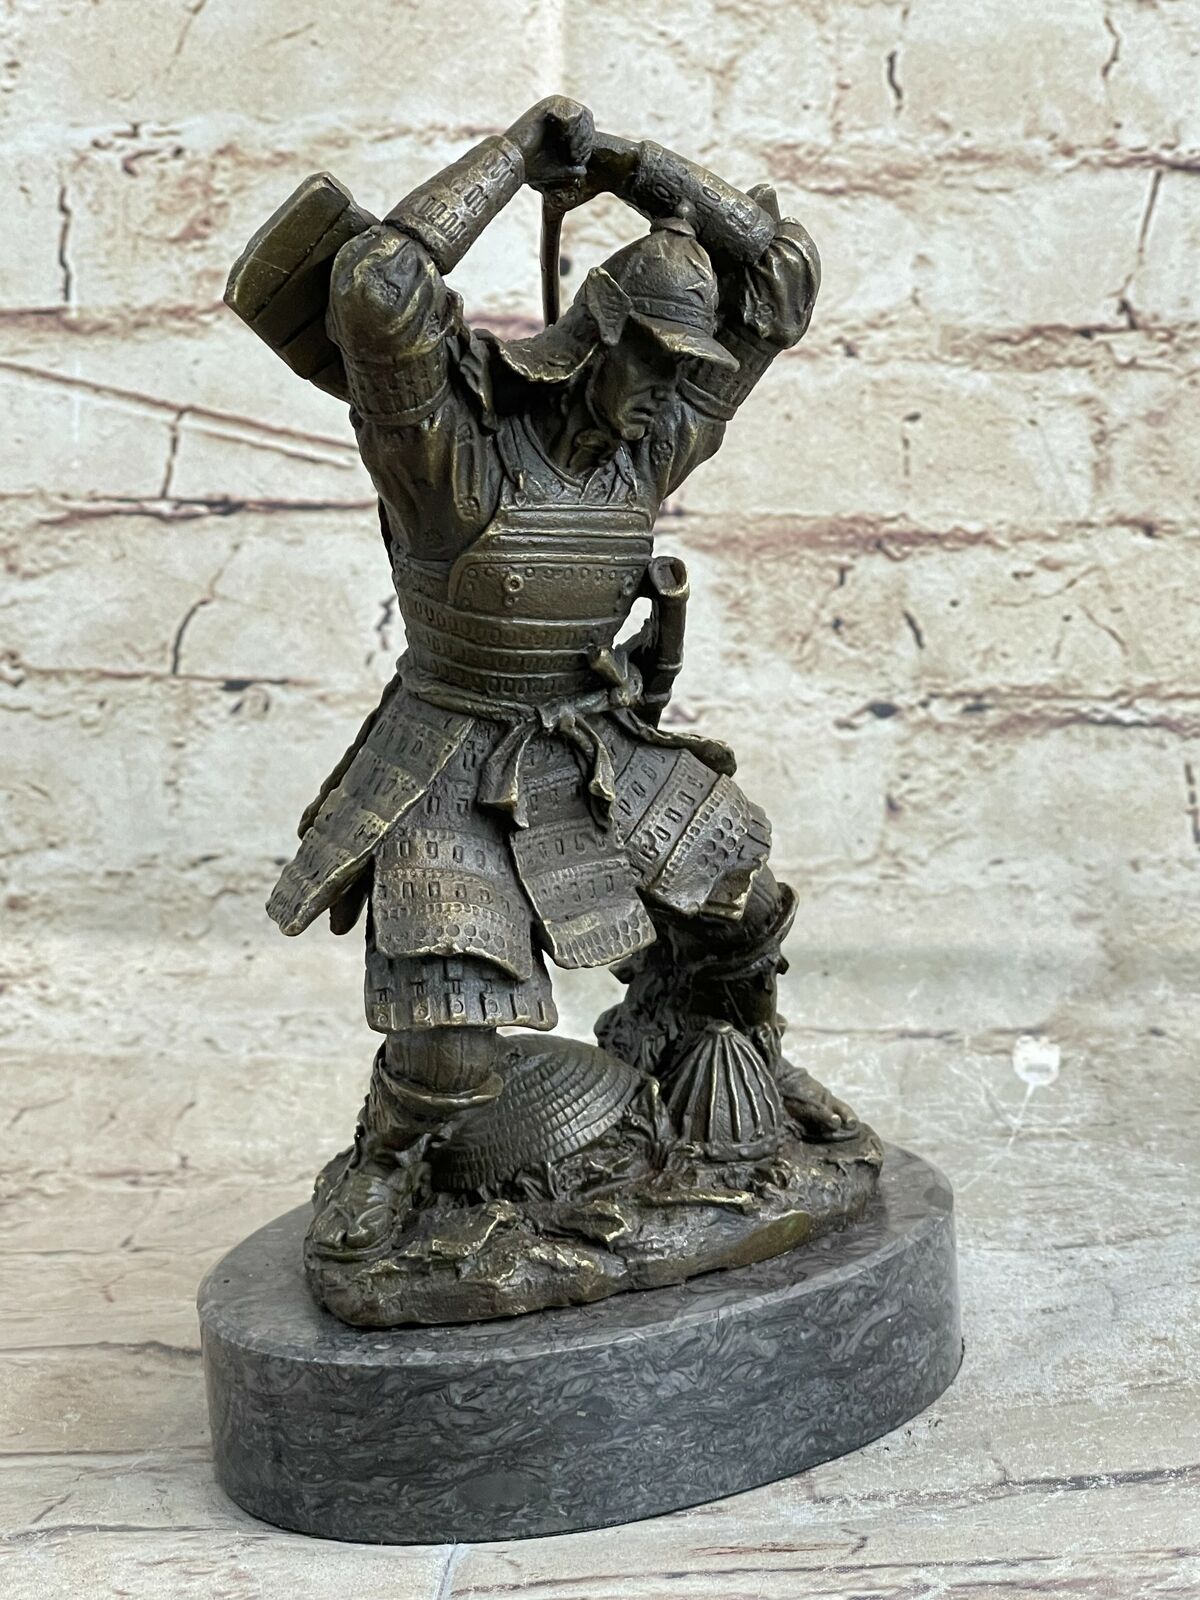 VERY FINE Japanese 100% Bronze Sculpture Figures of Samurai Marble Platform Gift